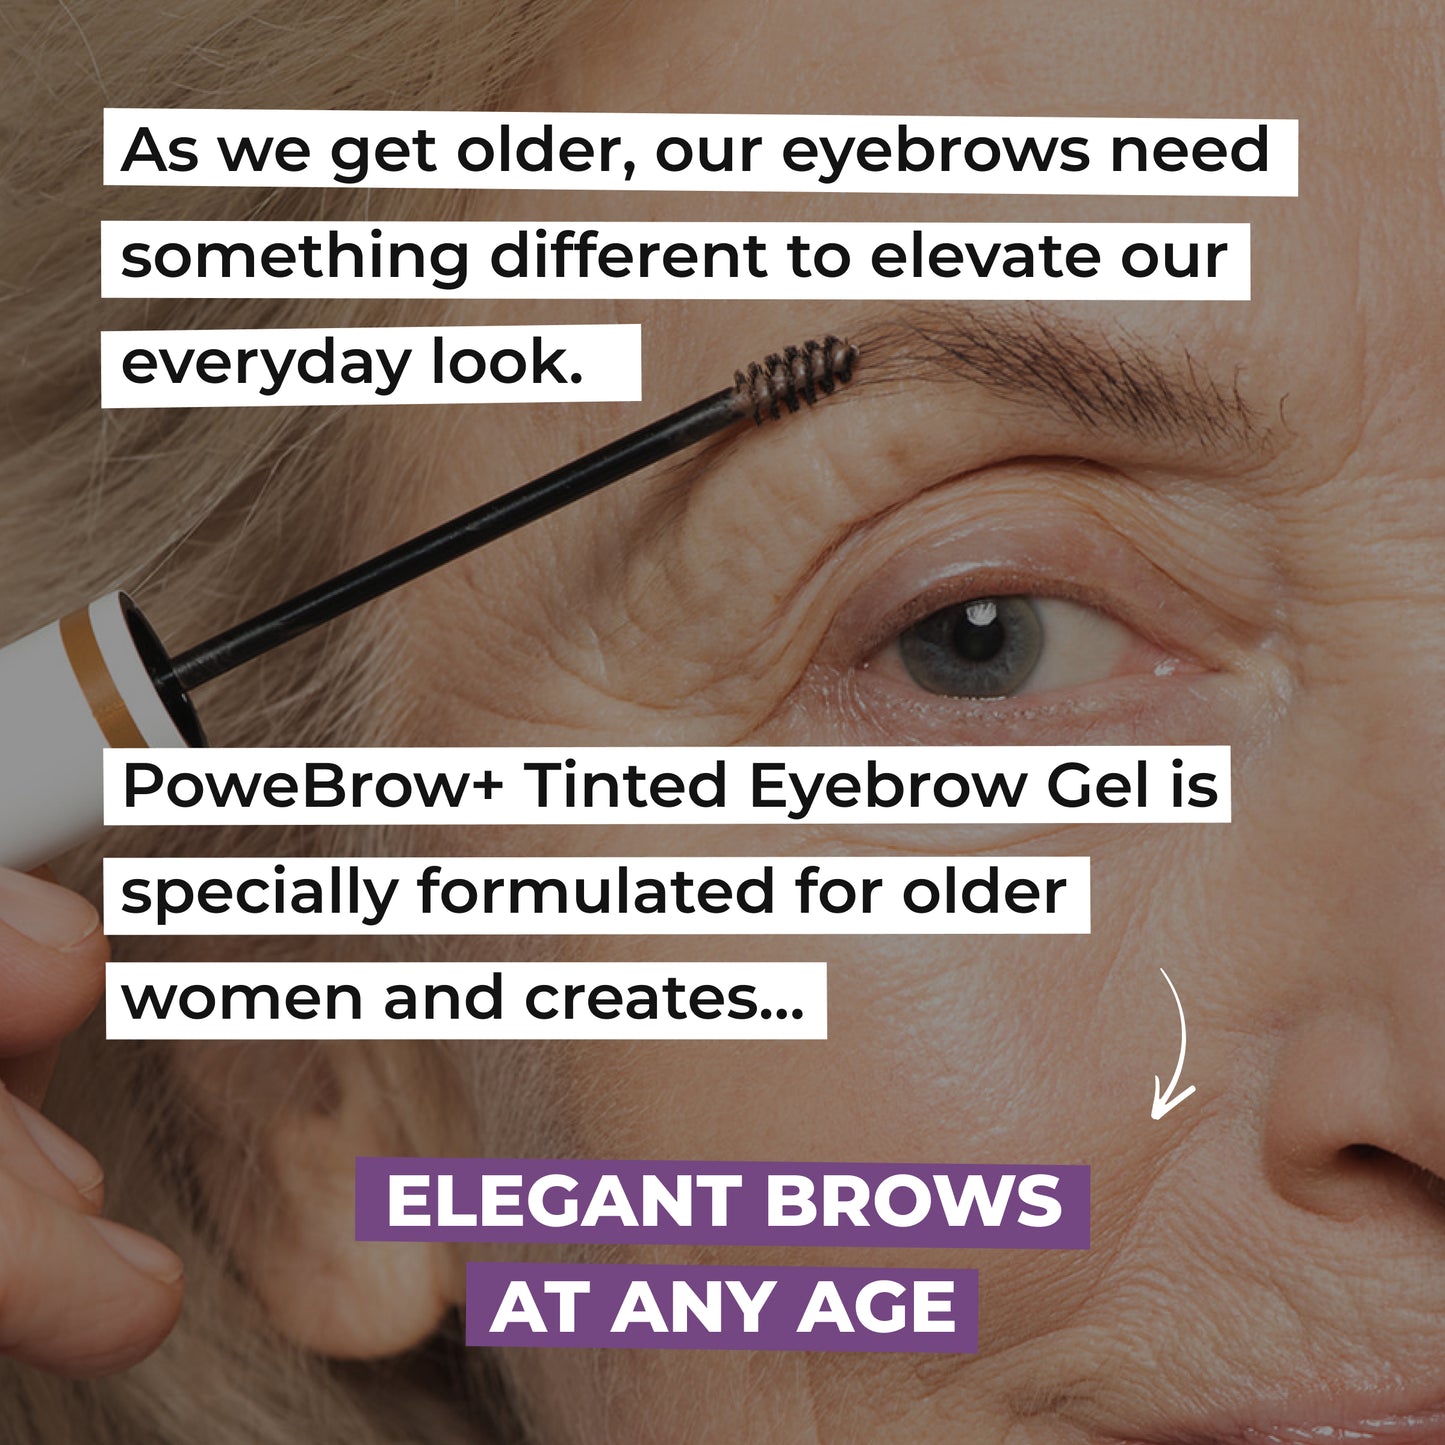 PowerBrow+ Tinted Eyebrow Gel